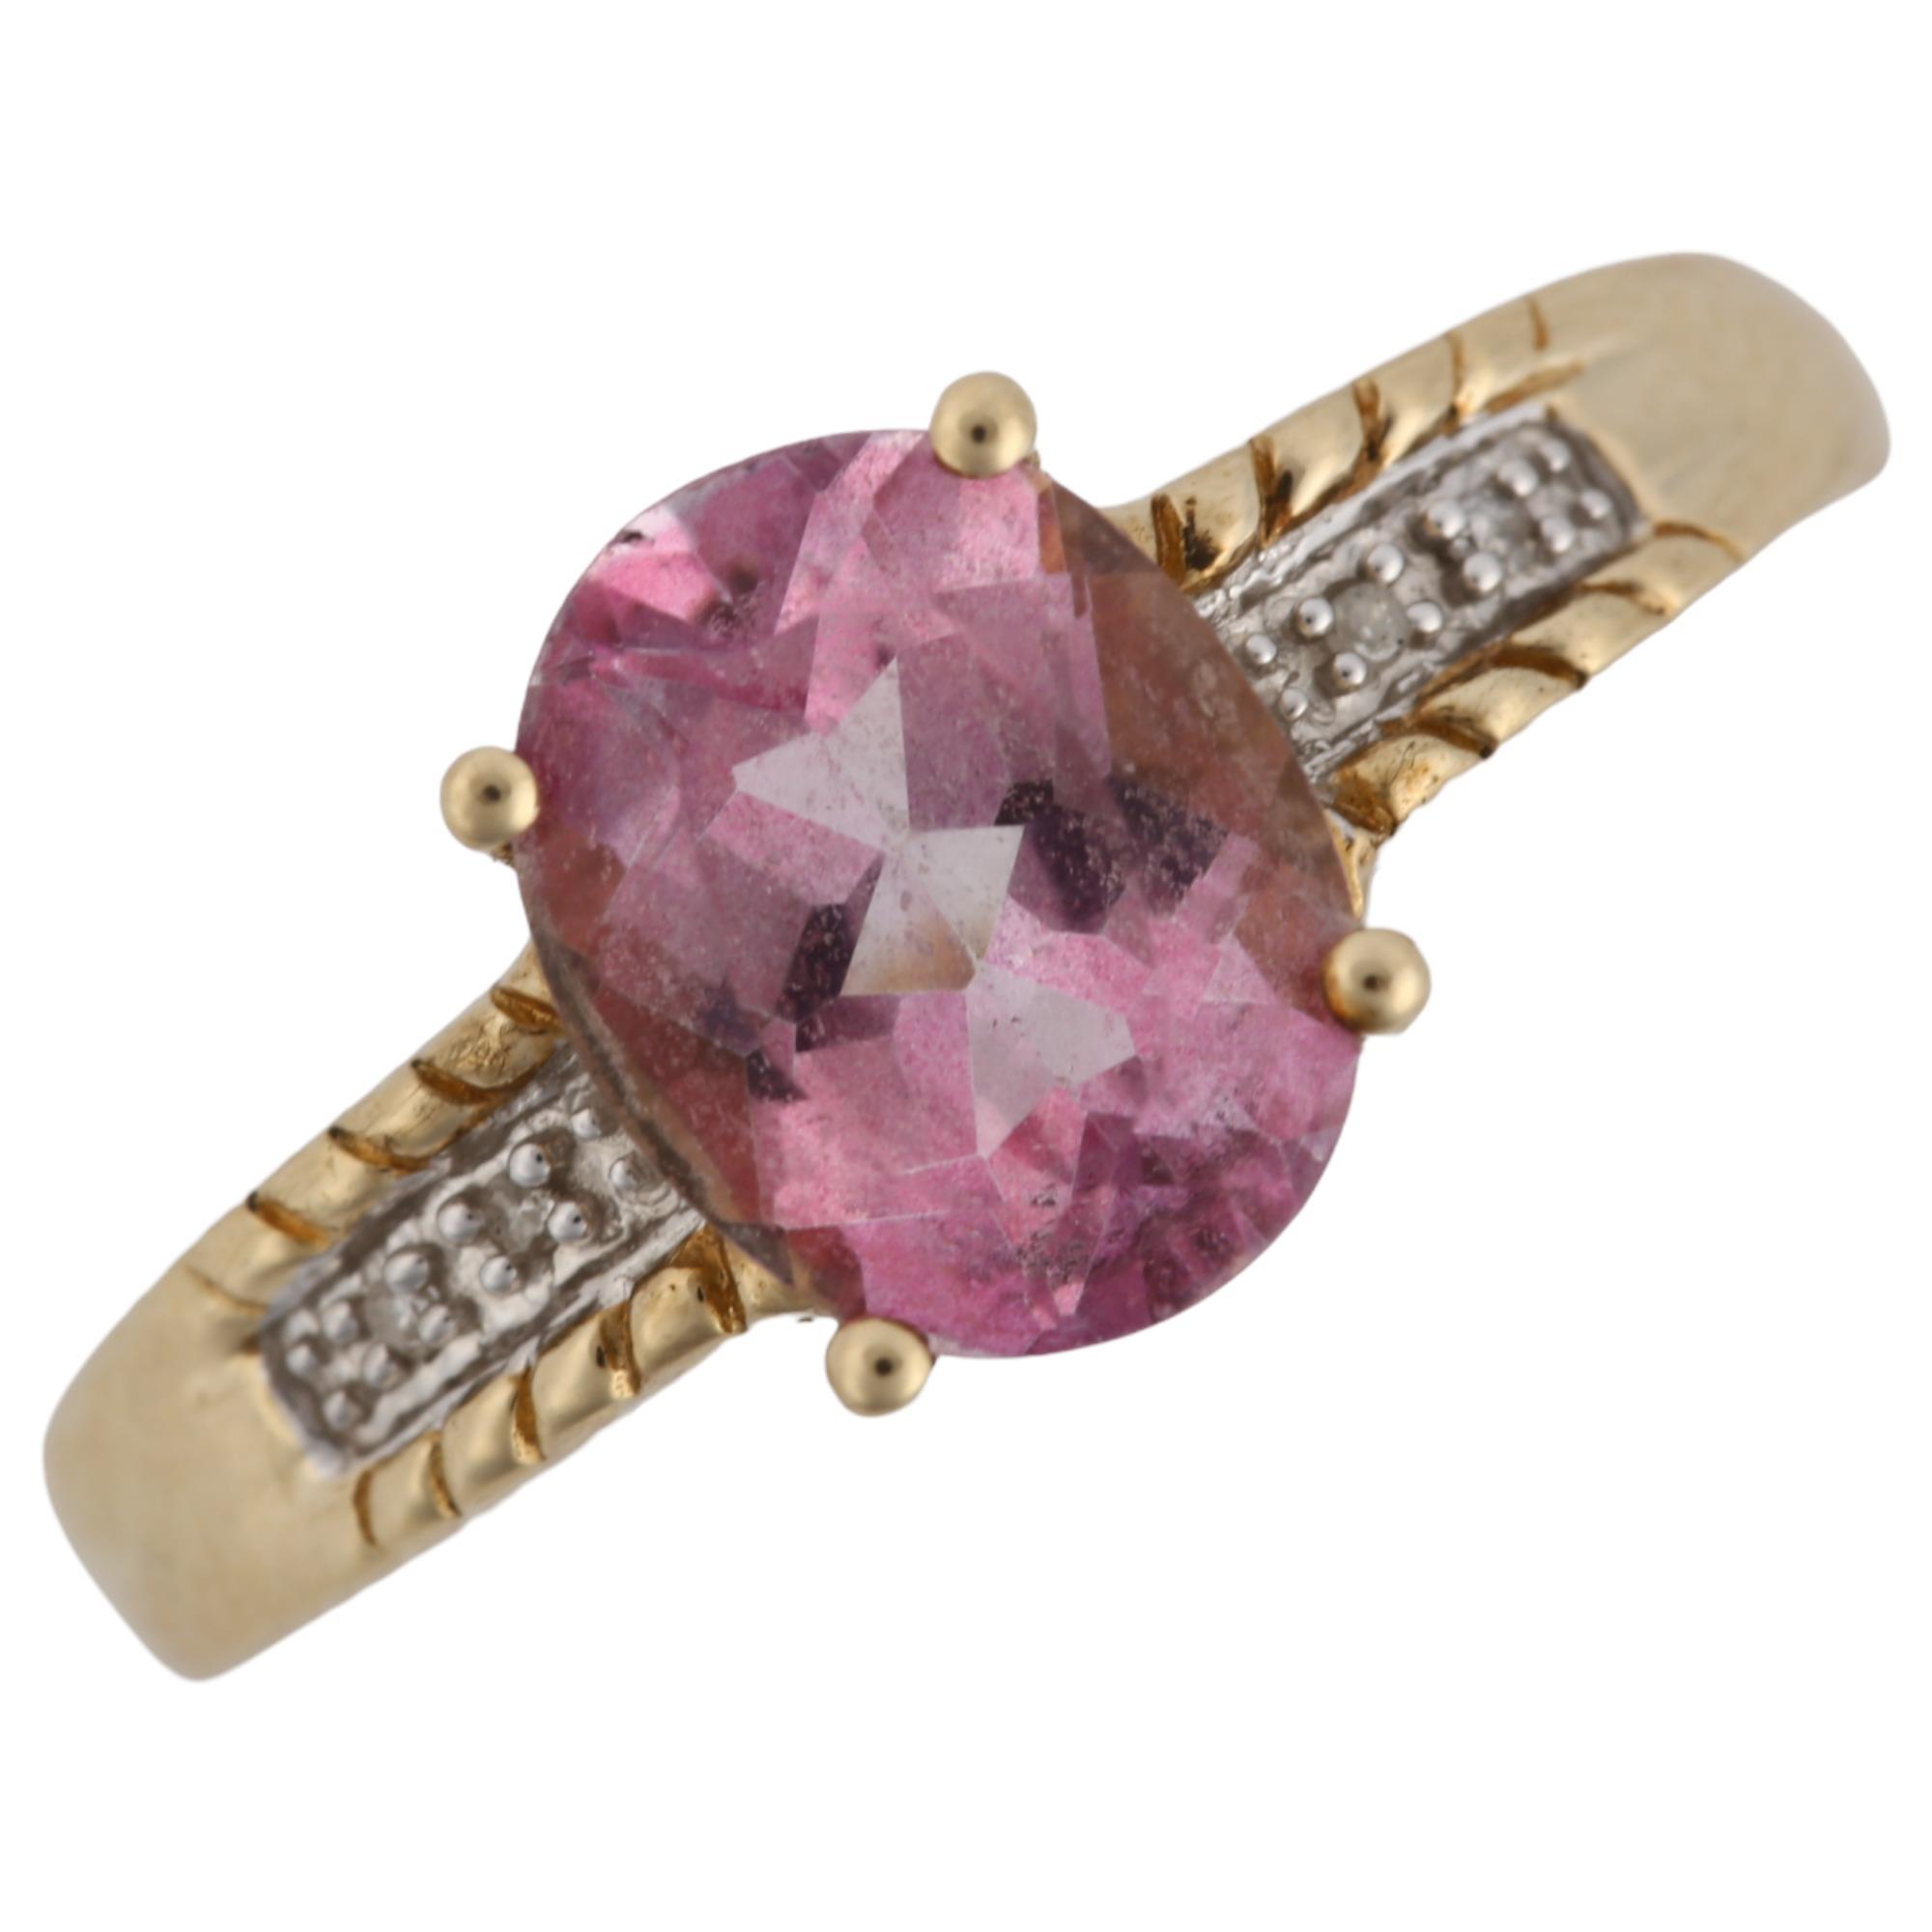 A 9ct gold pink tourmaline and diamond dress ring, set with oval mixed-cut tourmaline, setting